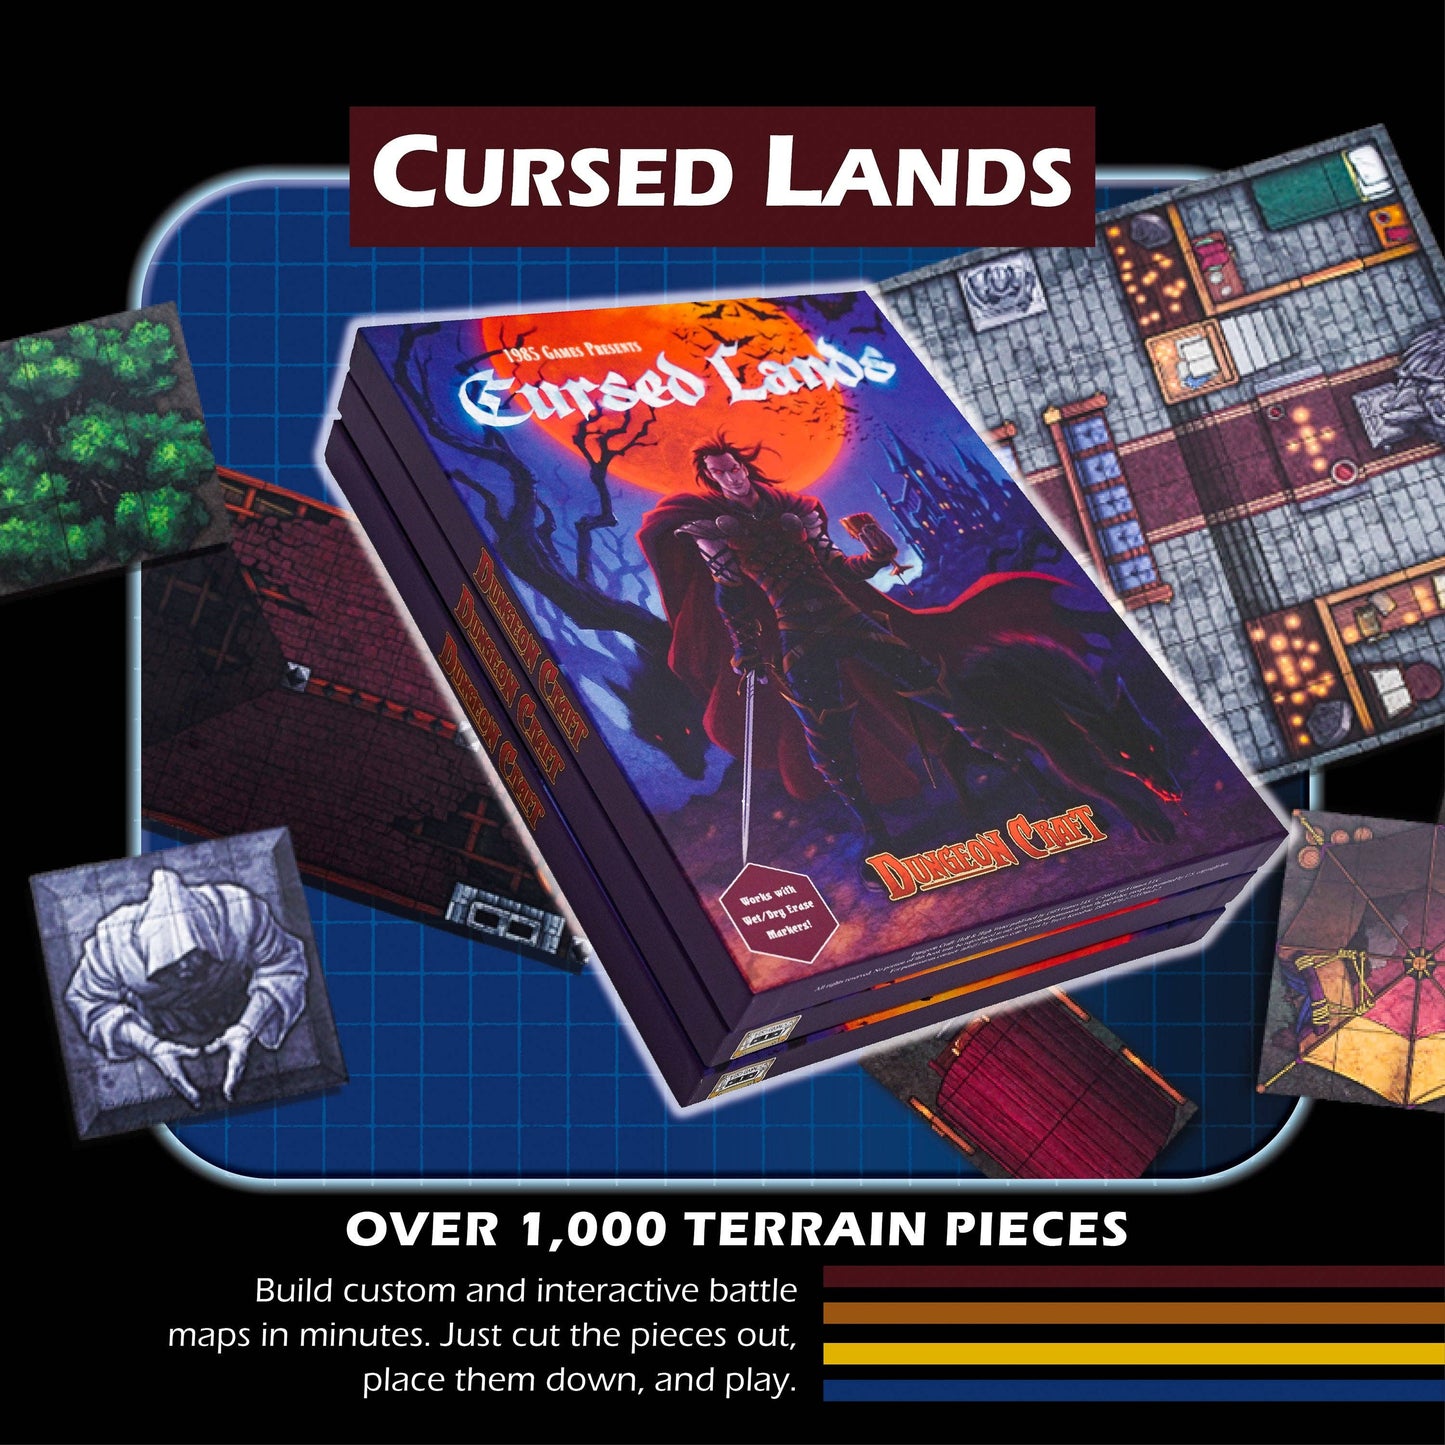 Dungeon Craft - Cursed Lands Book 2D Terrain for DnD